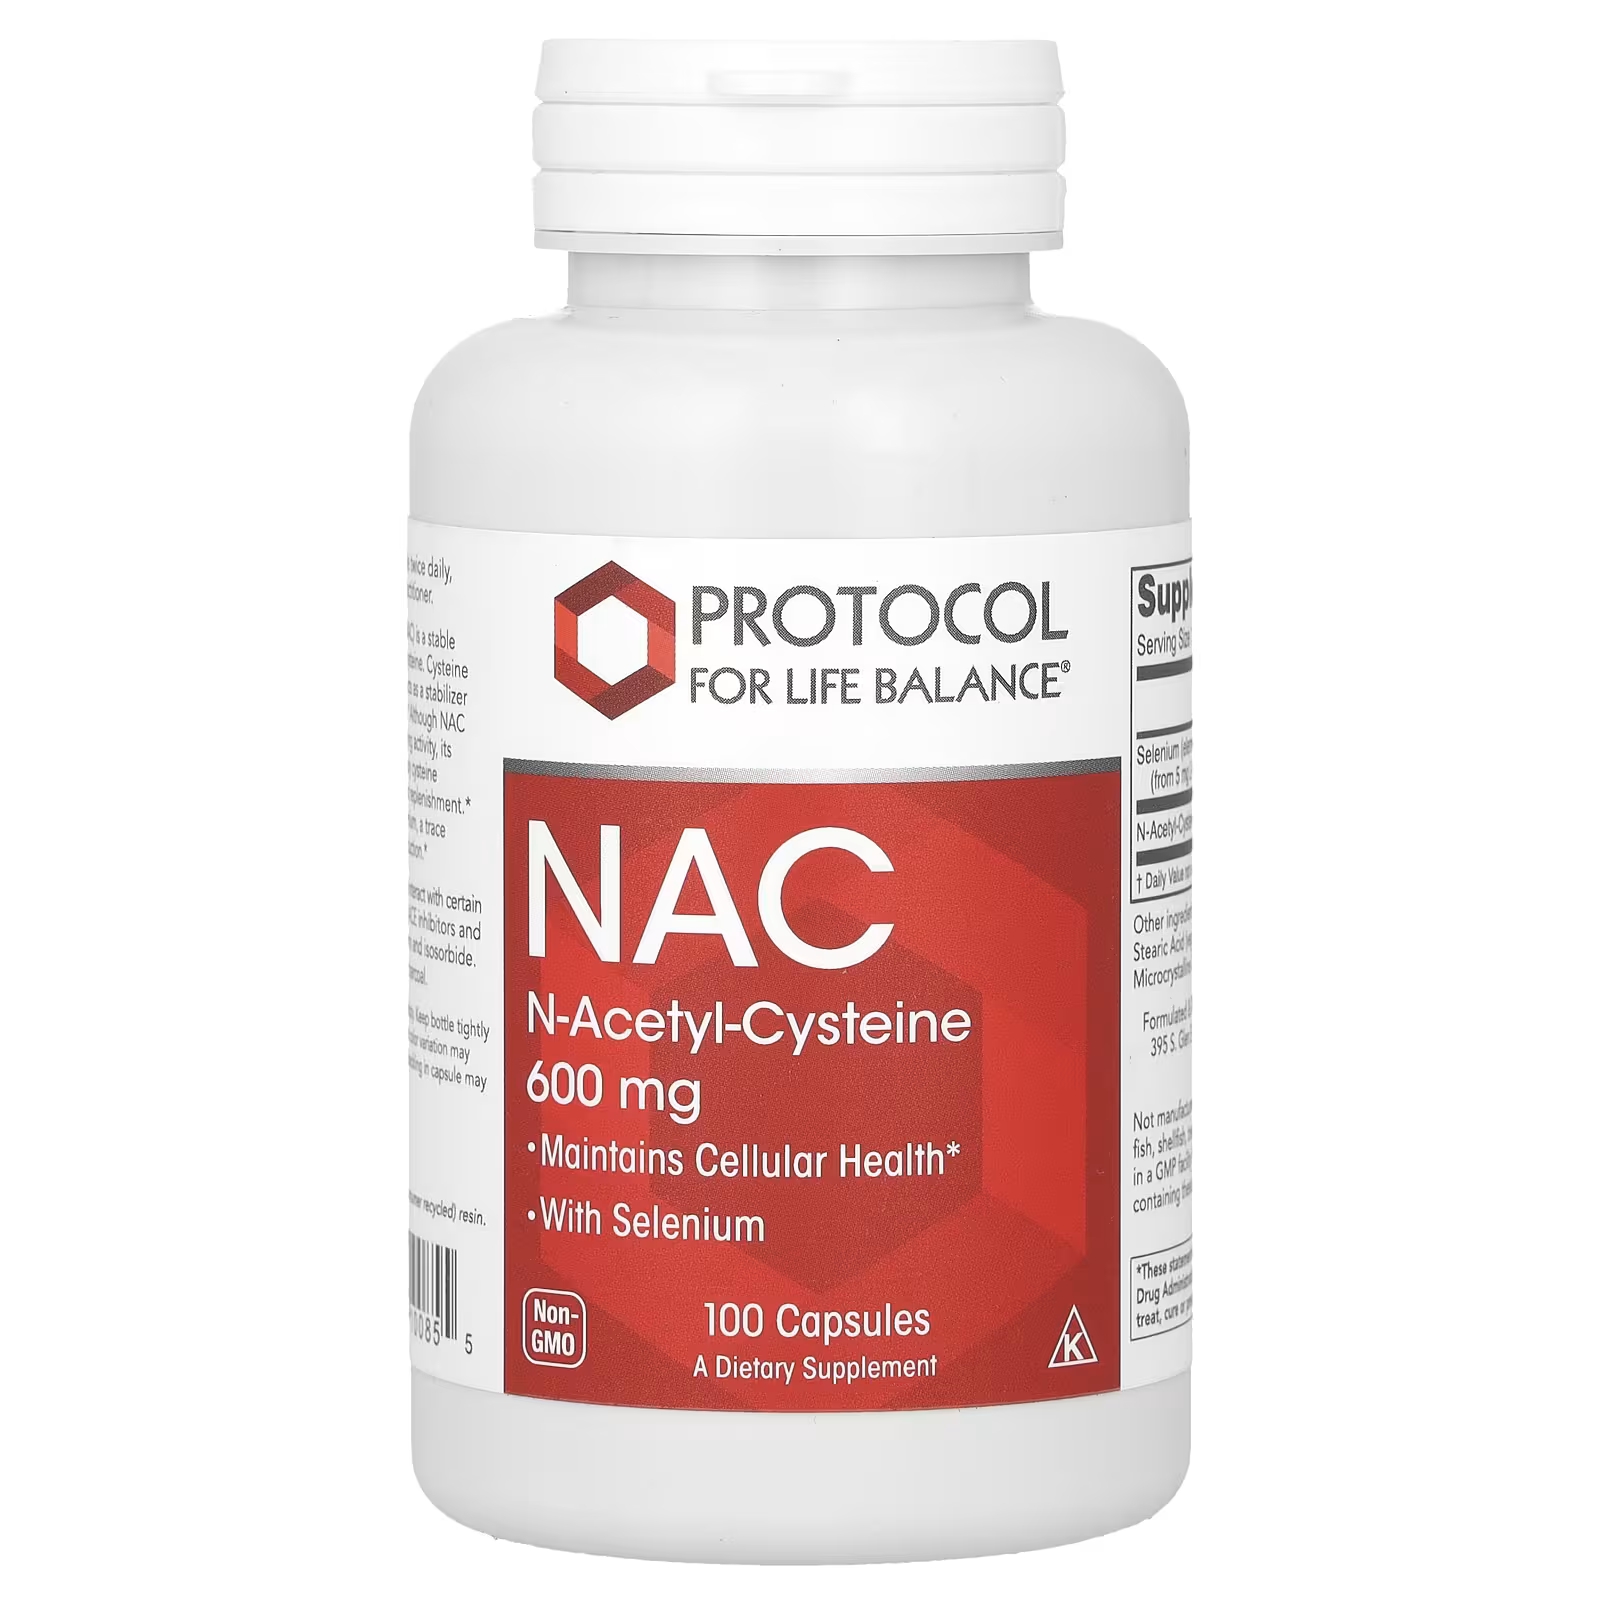 NAC N-ацетилцистеин Protocol for Life Balance 600 мг, 100 растительных капсул now foods nac n ацетилцистеин 600 мг 100 растительных капсул